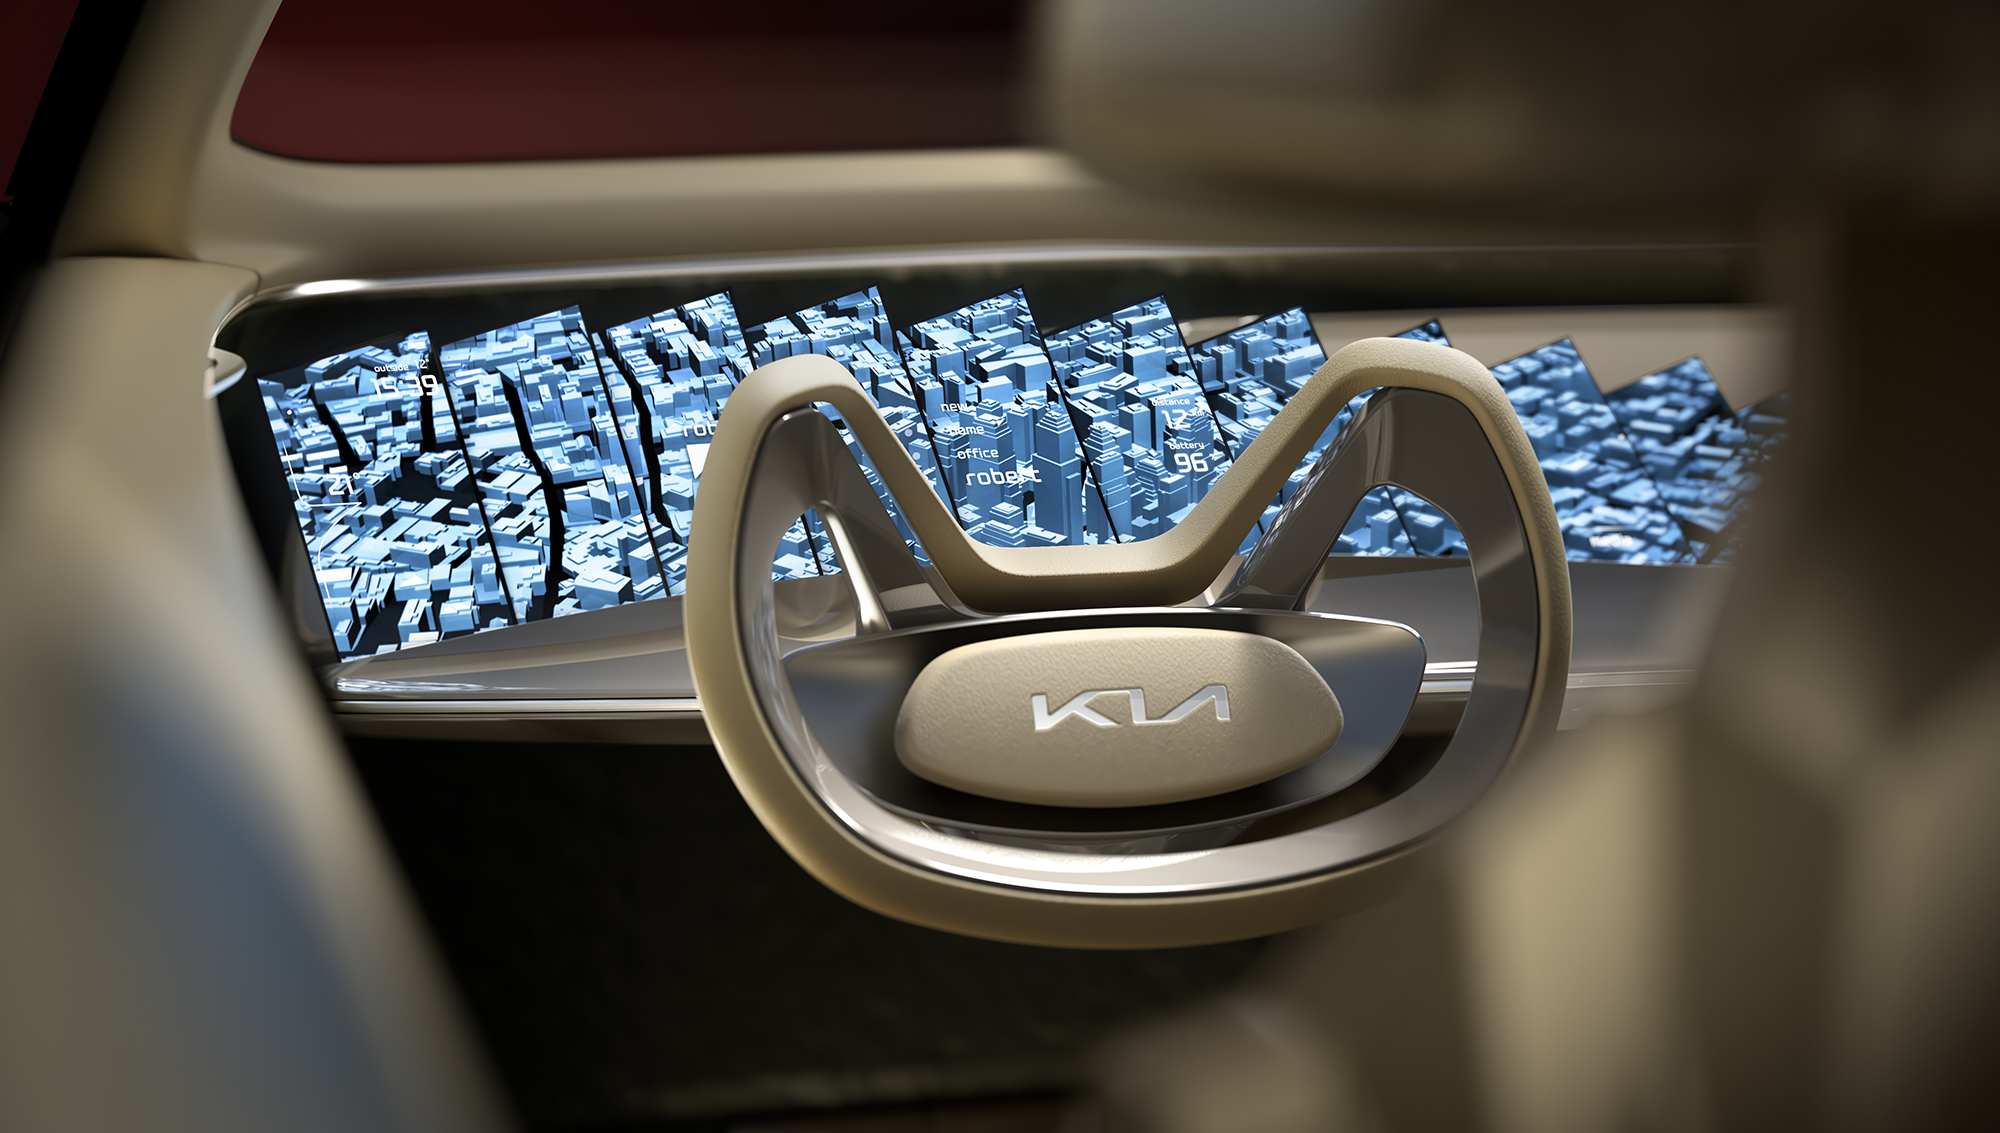 Kia's Imagine EV concept uses 21 screens to build the dashboard of the future